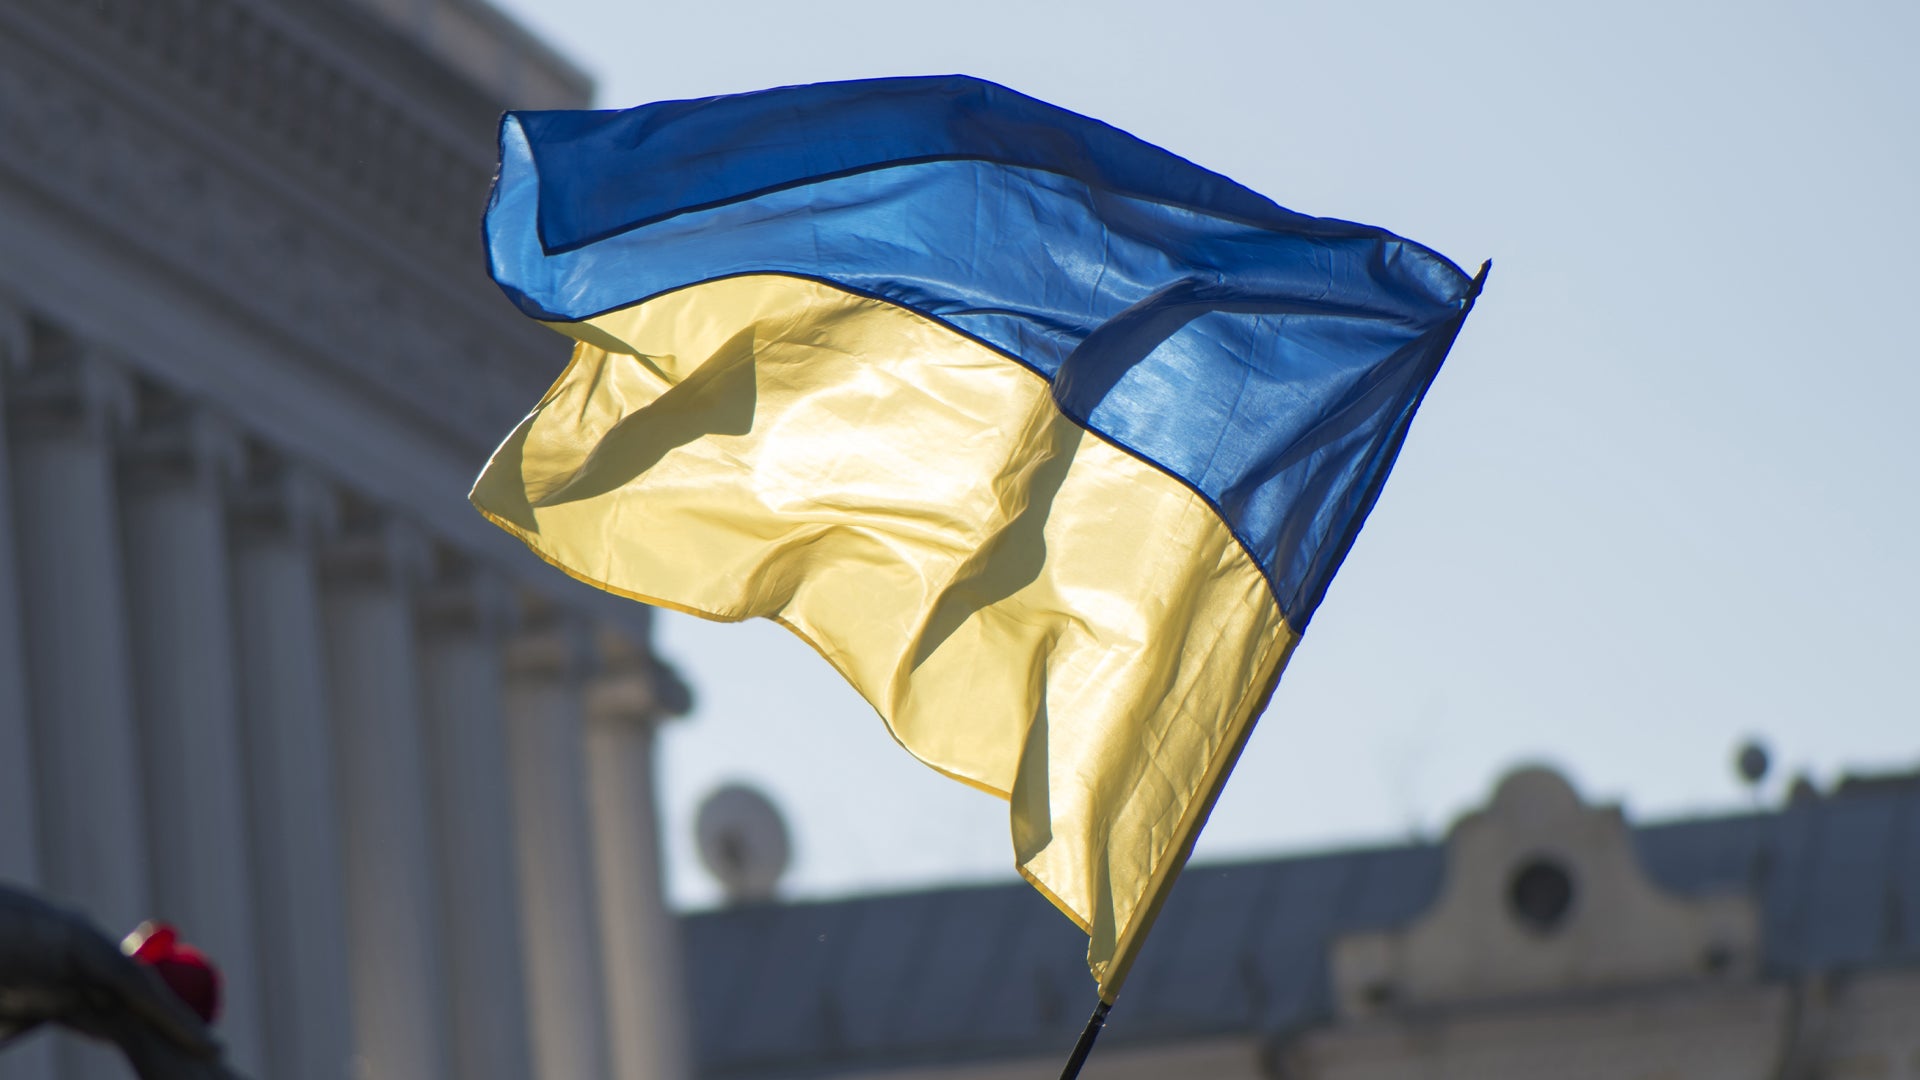 Ukraine flag waving